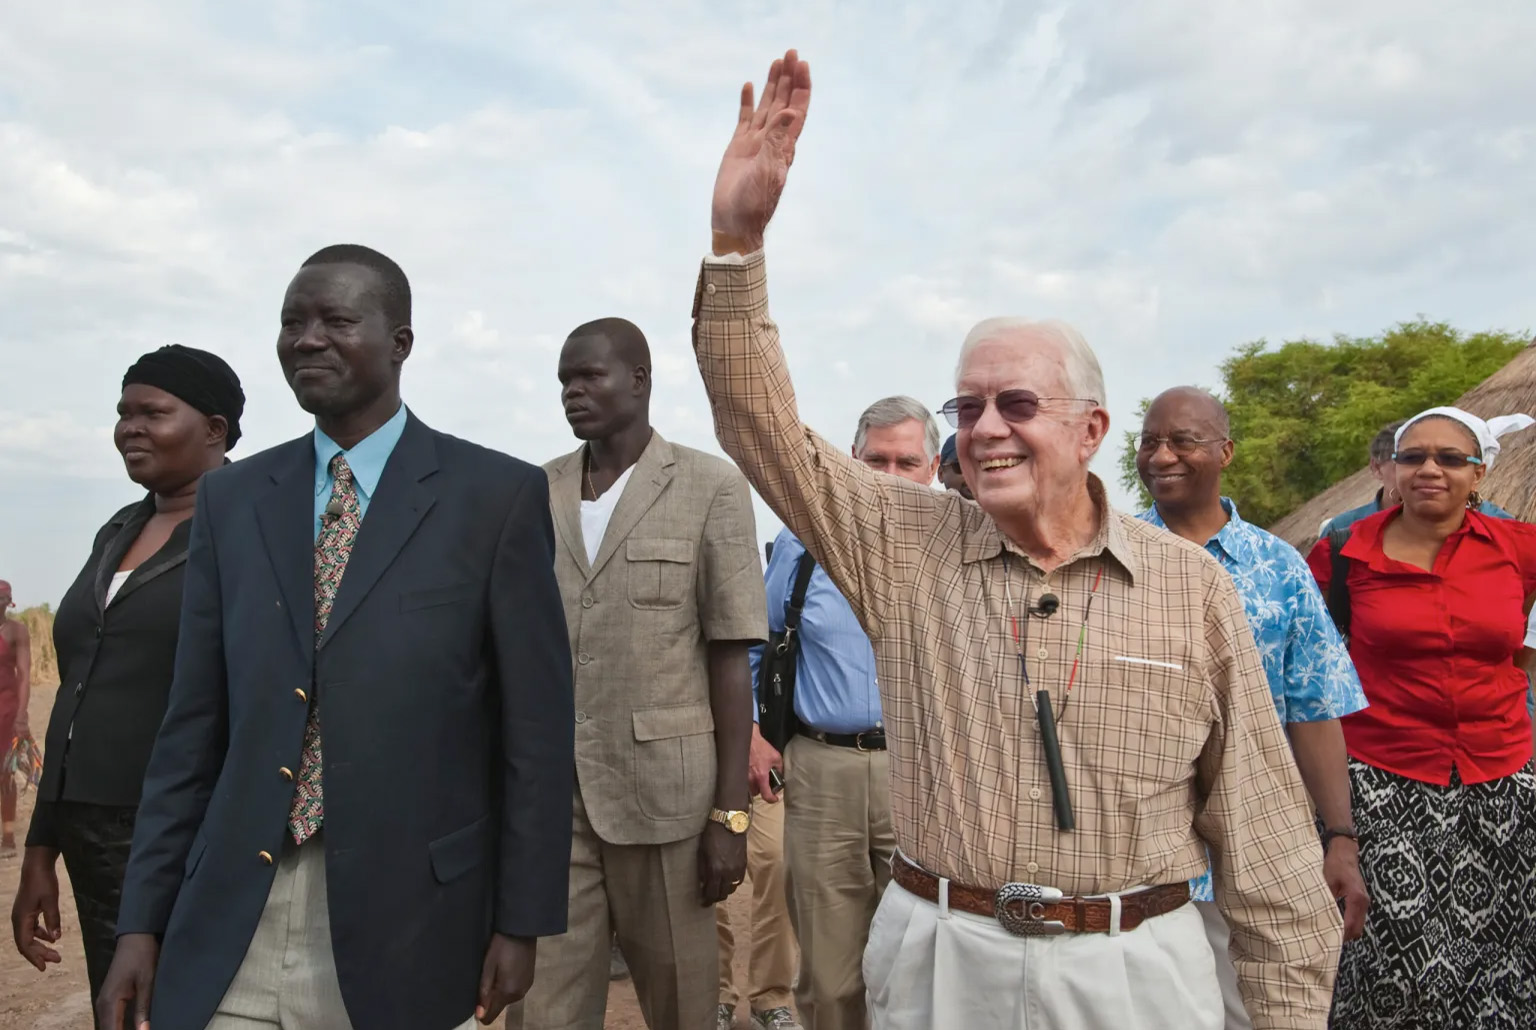 Jimmy Carter waves to crowd while walking alongside Makoy Samuel Yibi.